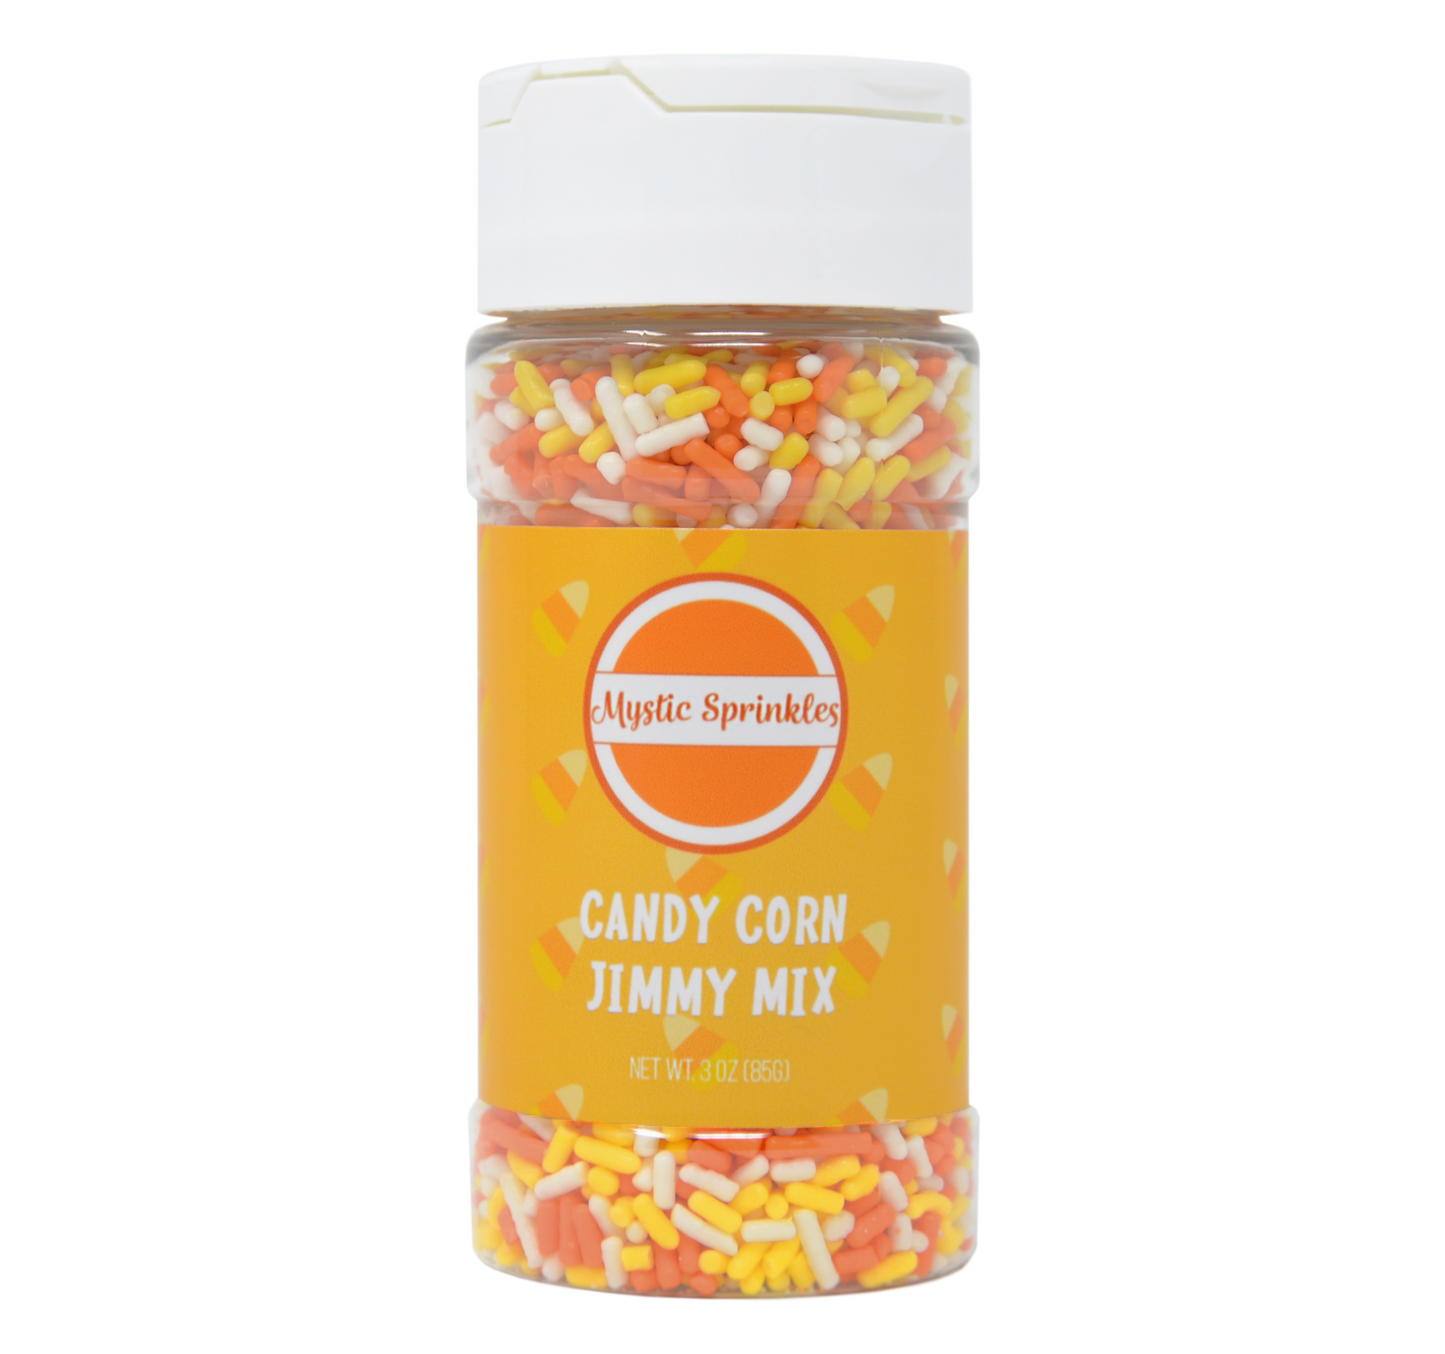 Candy Corn Jimmy Mix 3oz Bottle